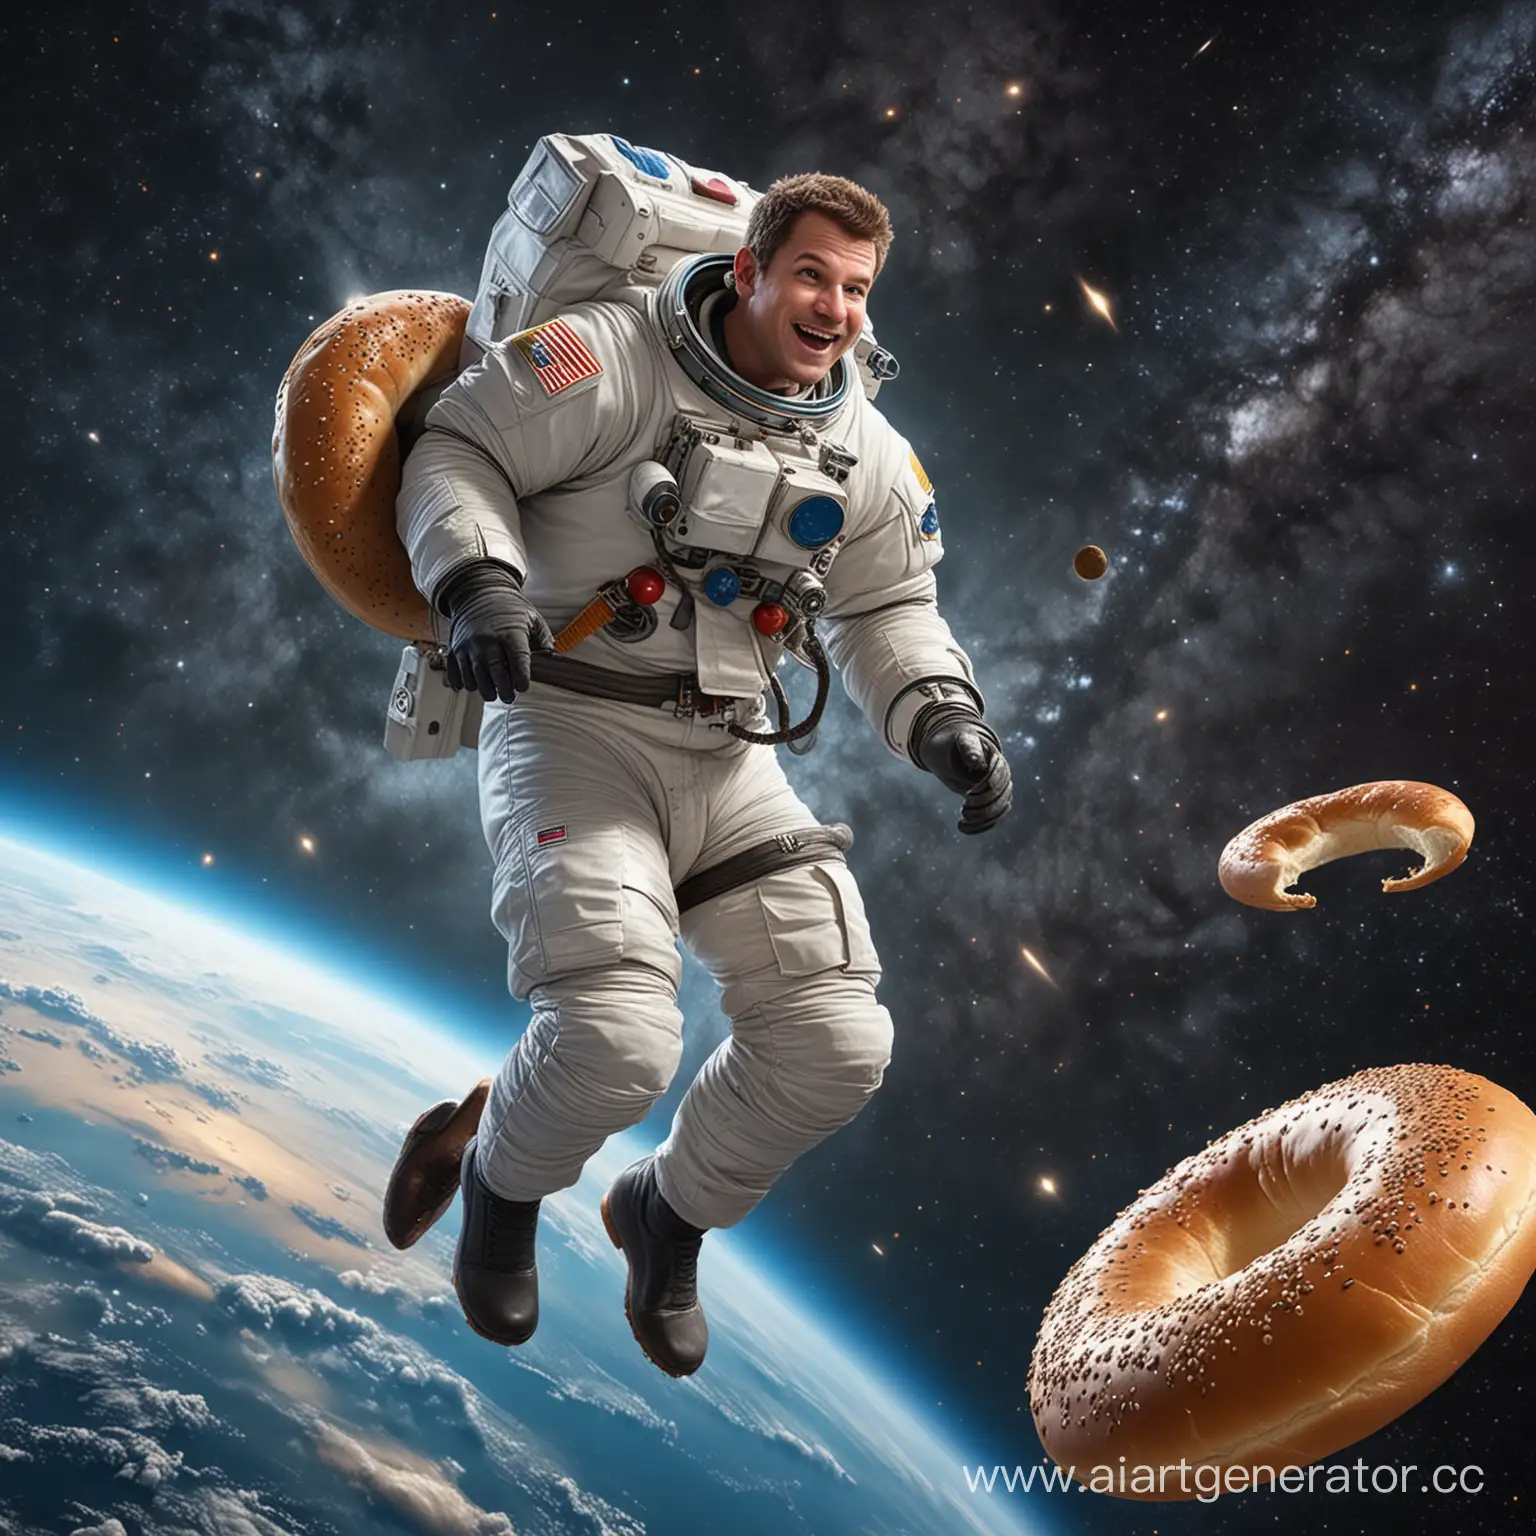 Bagel-man jump in space realistic